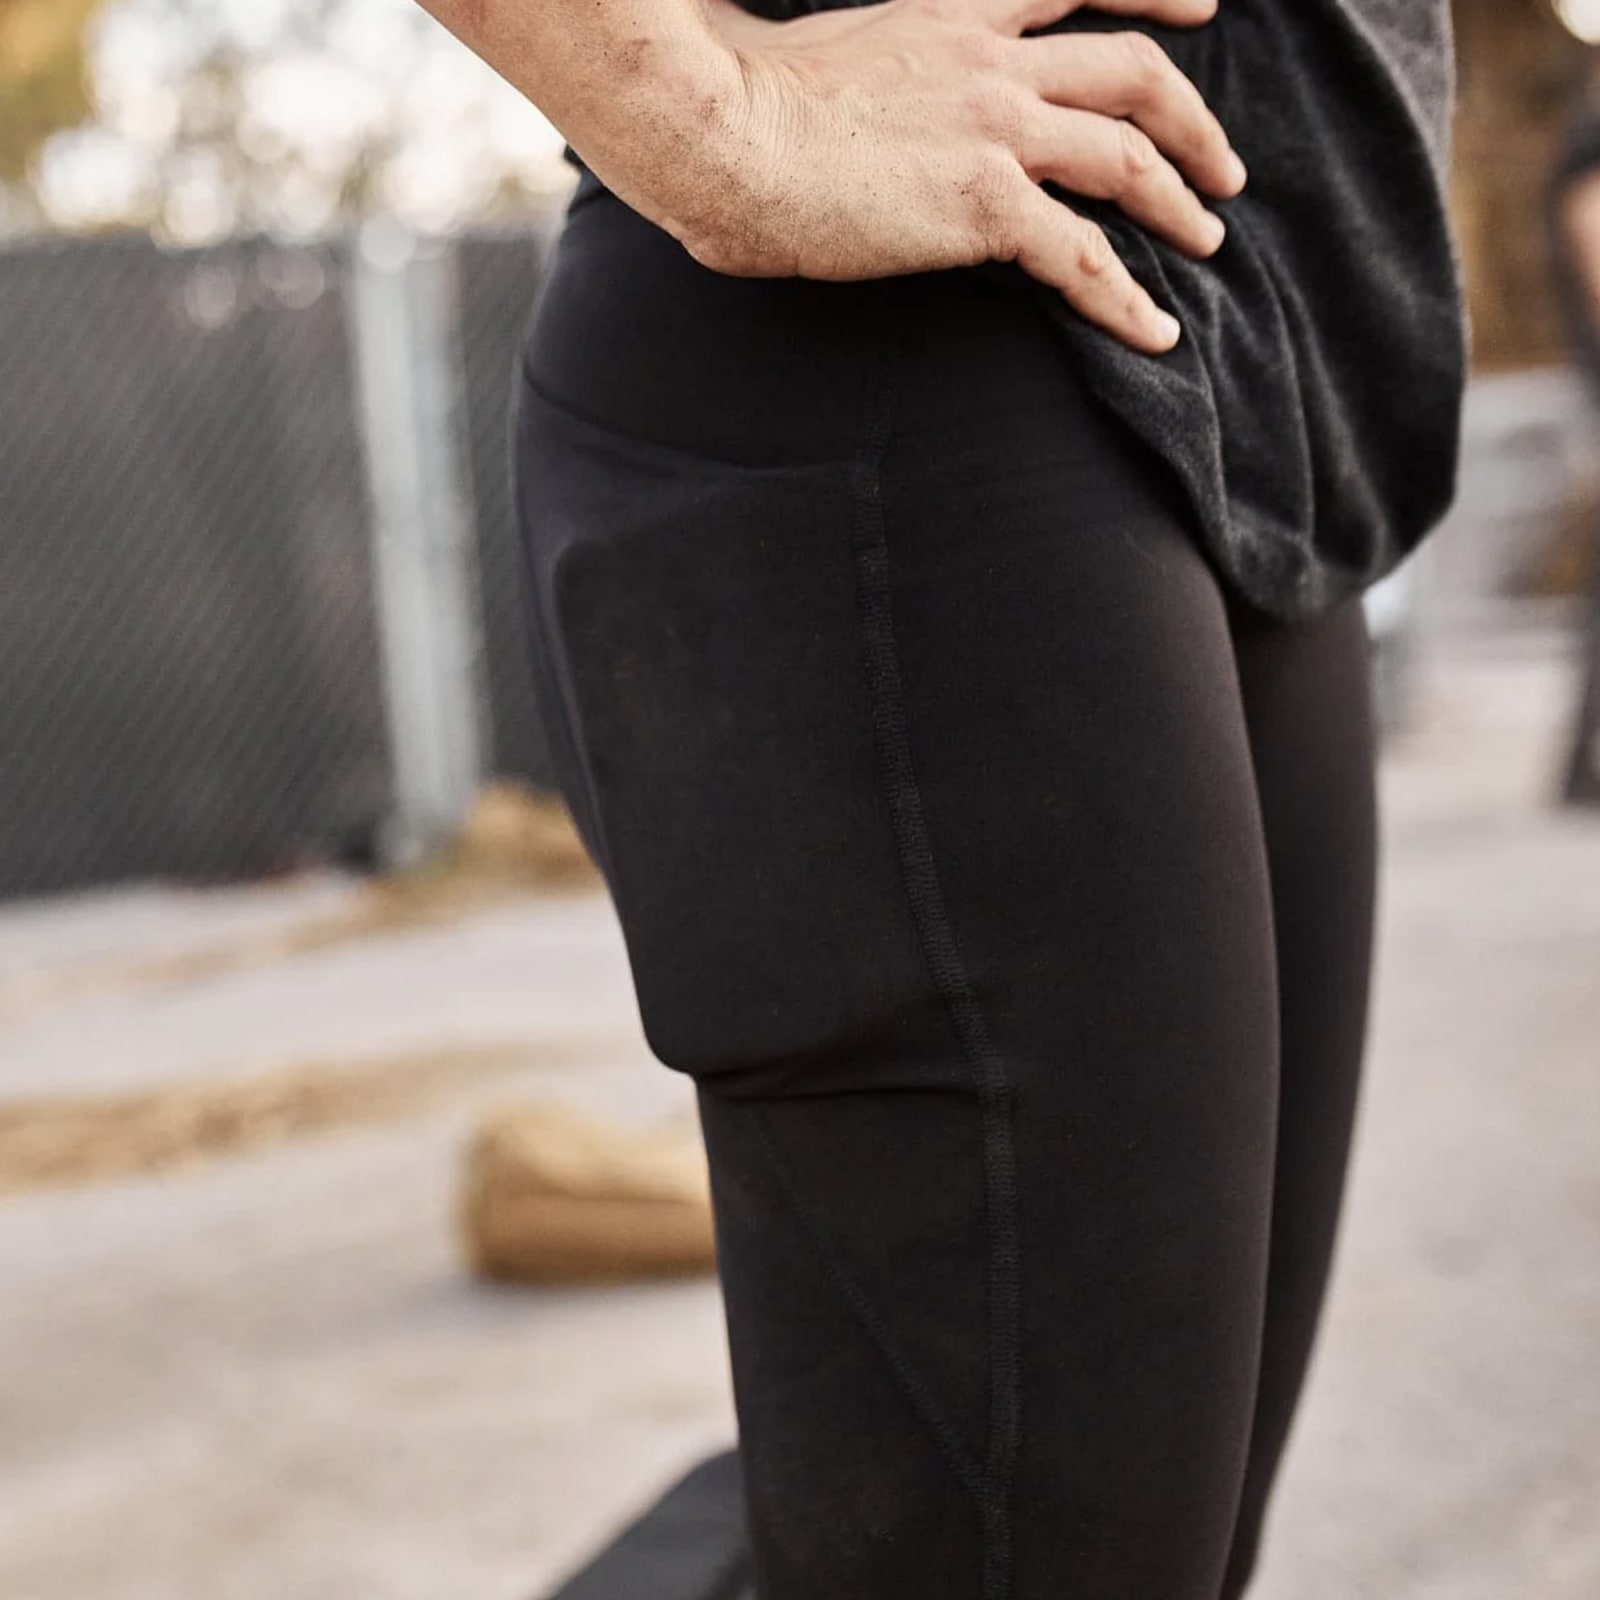 GORUCK Women's Indestructible Tough Leggings with Pockets - Black